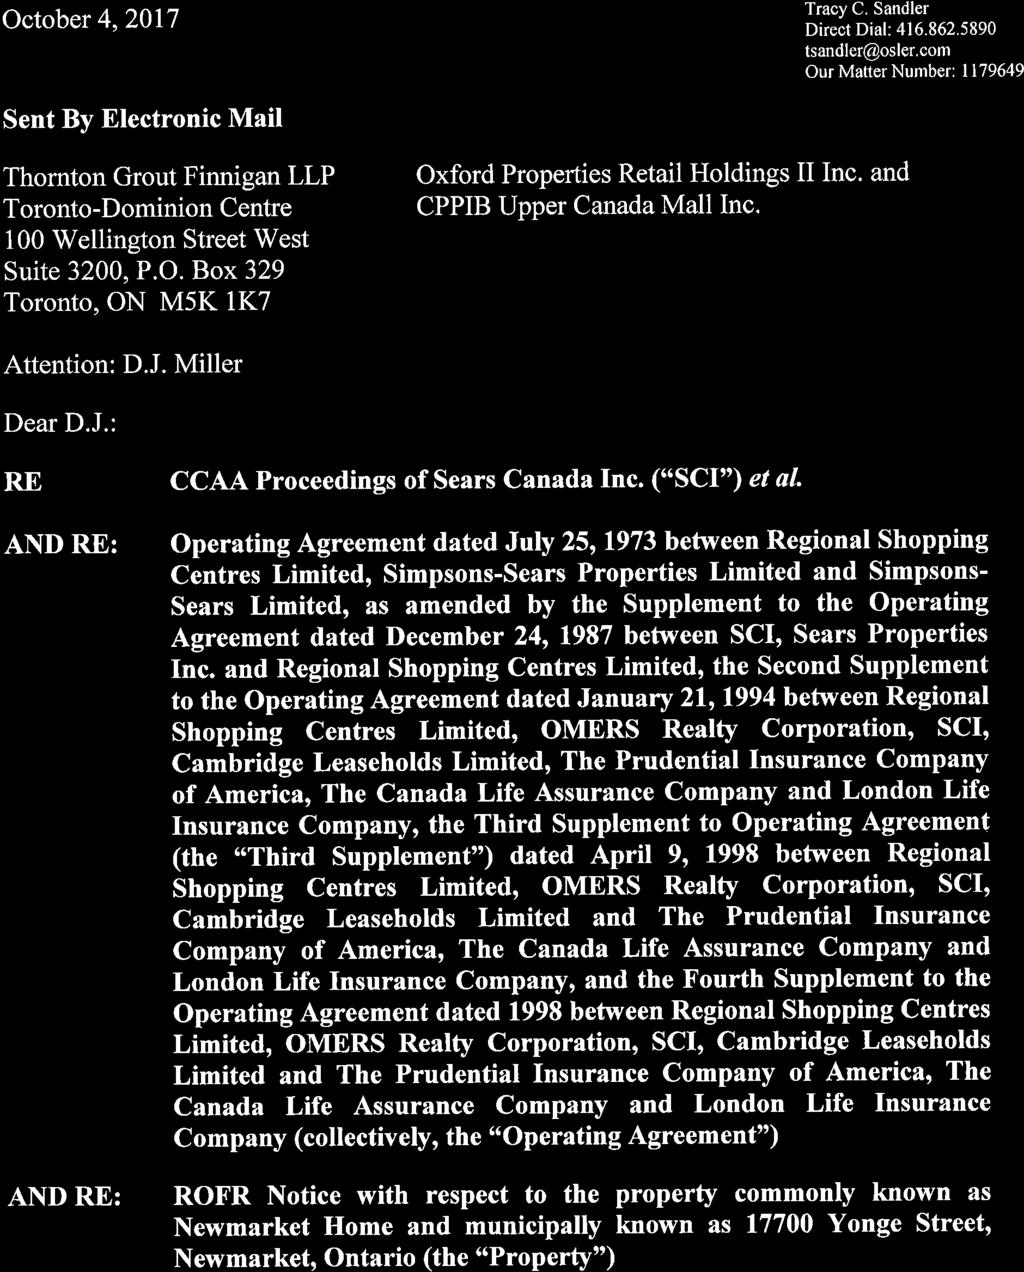 Osler, Hoskin & Harcourt t-l-p Box 5o, r First Canadian Place Toronto, Ontario, Canada M5x rb8 4r6.36z.zrrr untn 4r6.862.